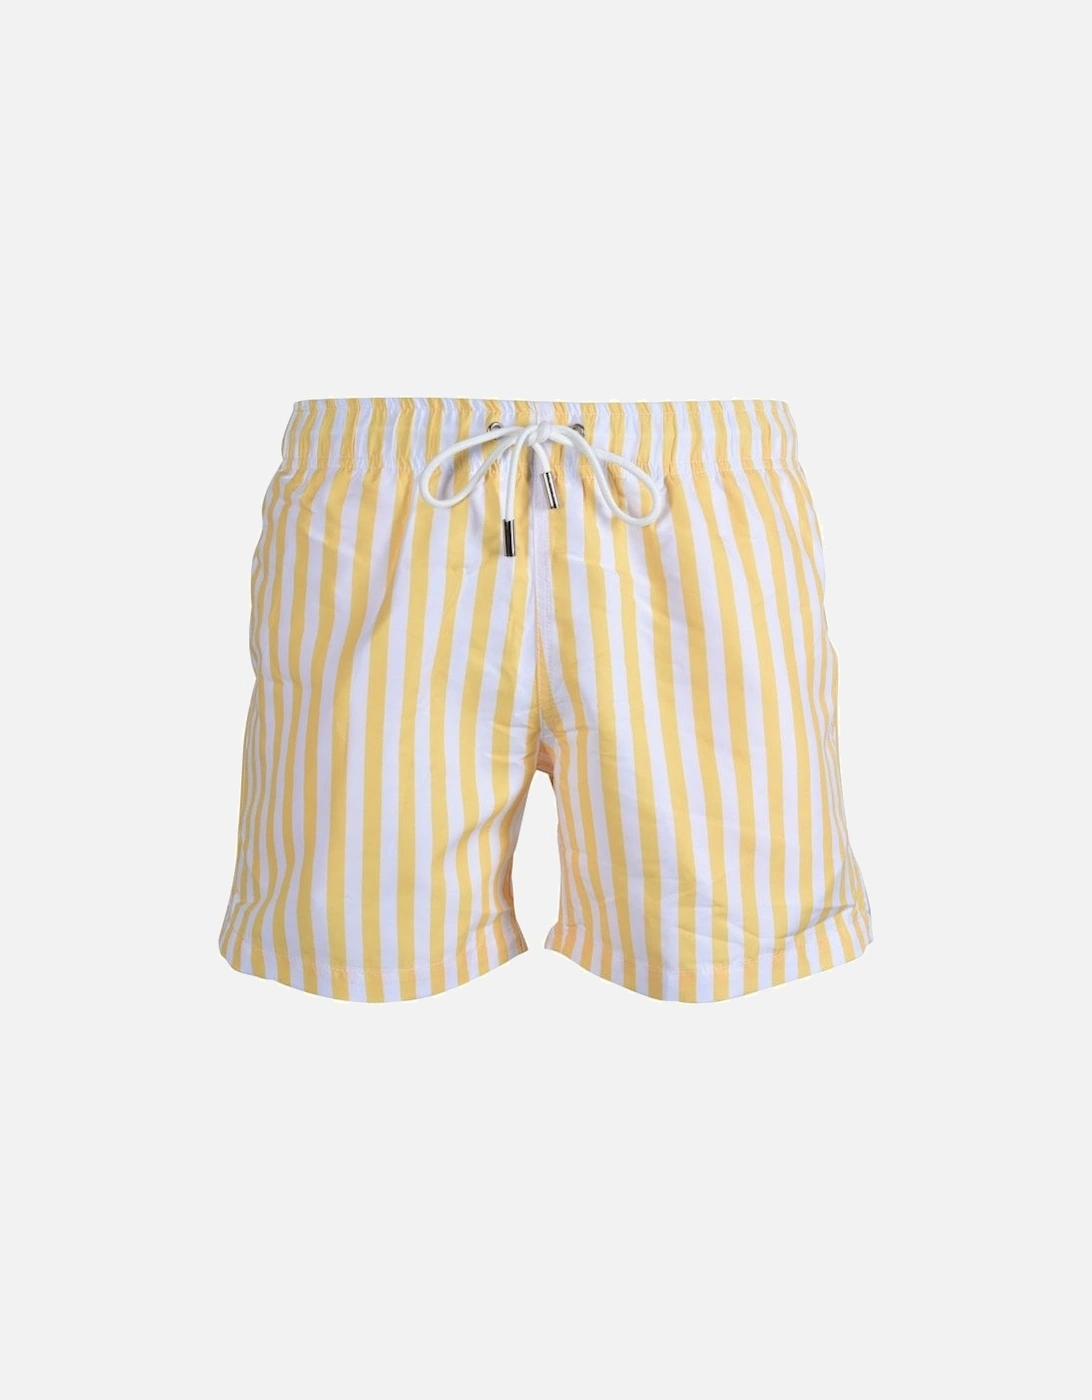 Banda Stripe Swim Shorts, Sunshine Yellow